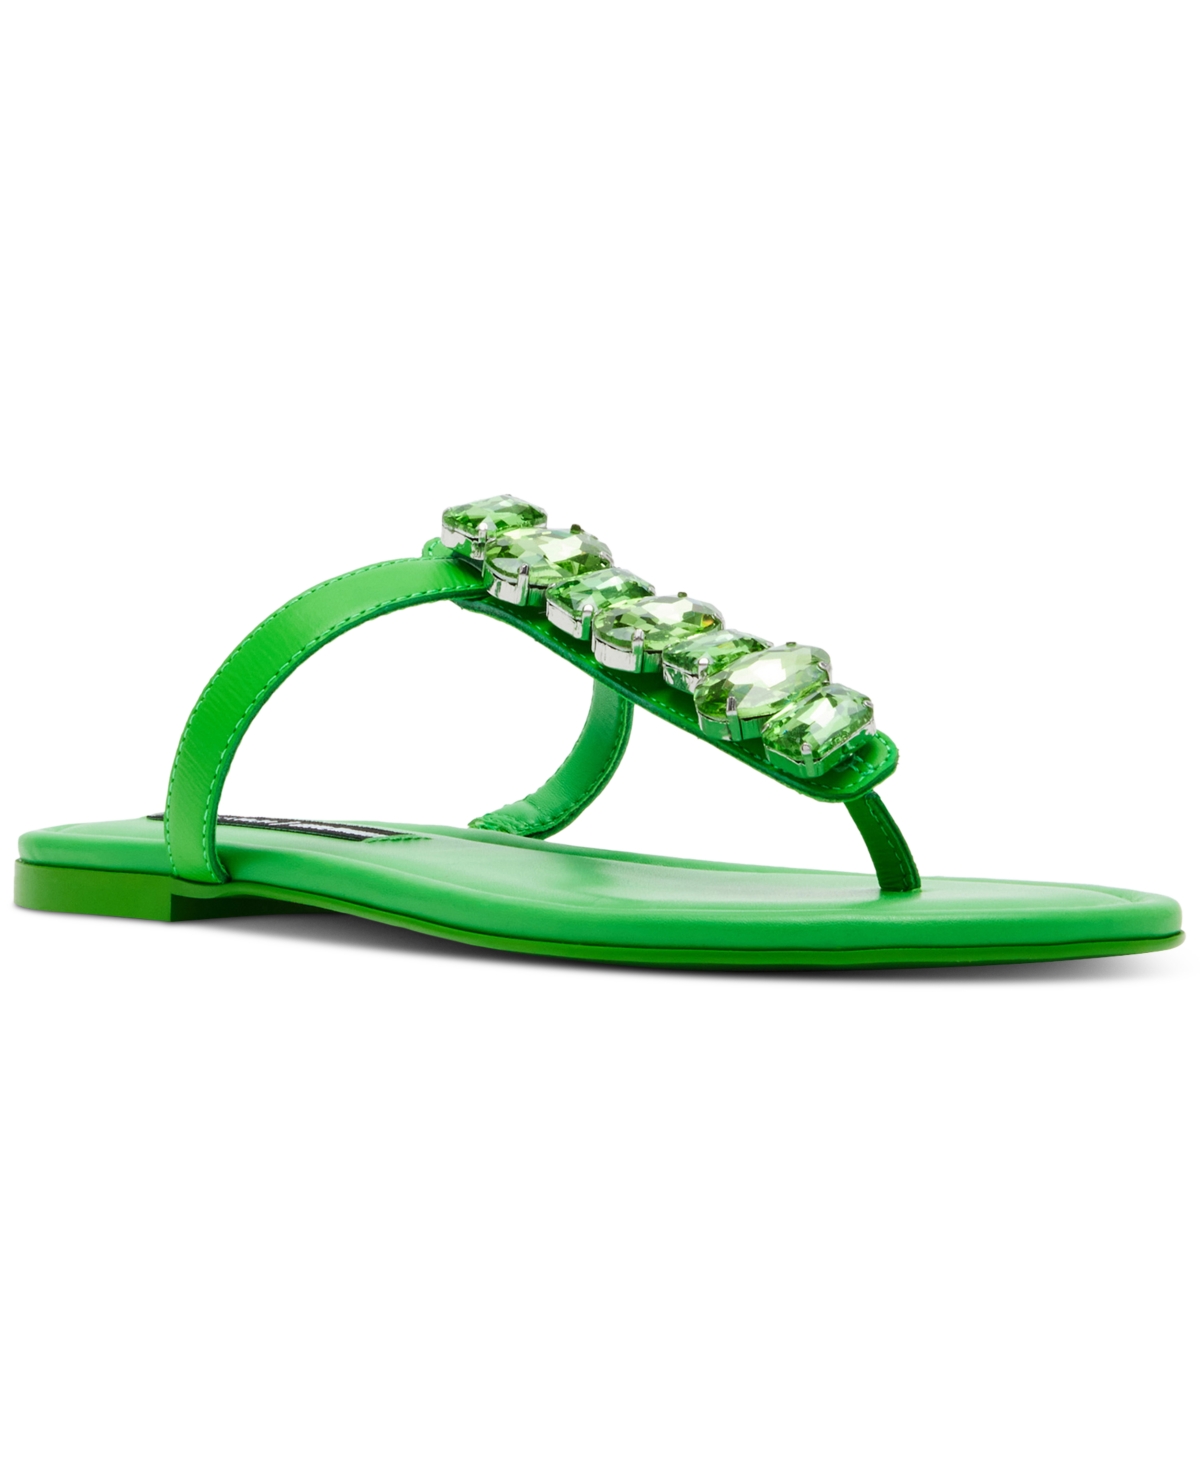 Jessica Rich x Steve Madden Women's Gemma Embellished T-Strap Slingback Sandals - Green Multi